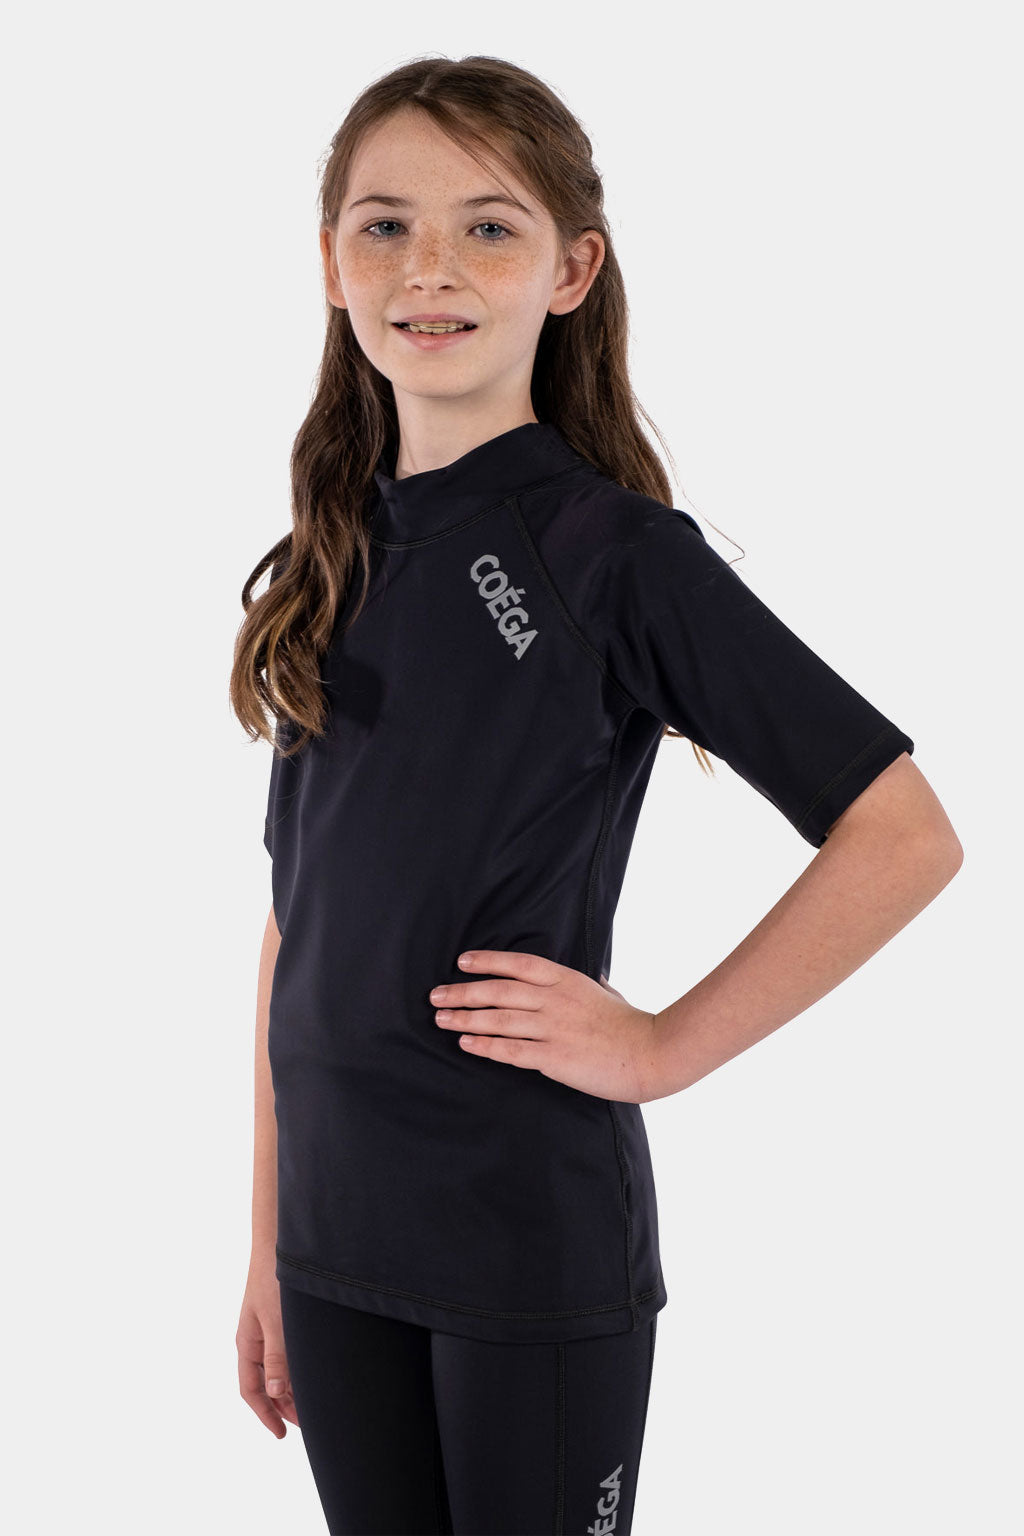 Coega - Girls Youth Rashguard Short Sleeve